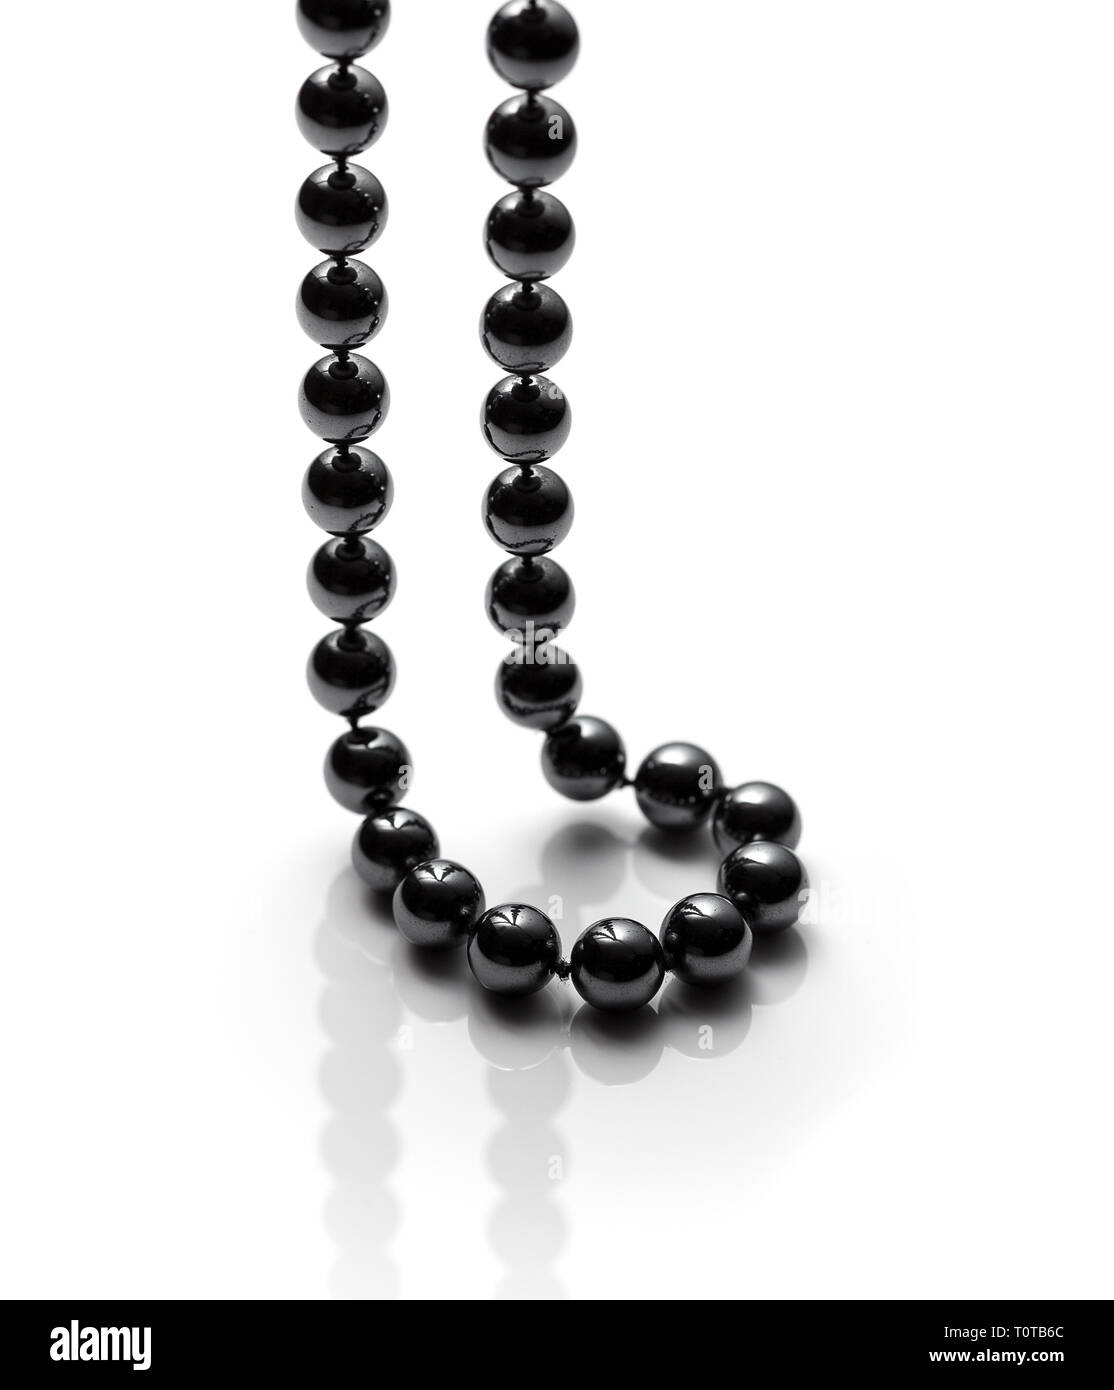 Onyx necklace on white background. Black bead necklace Stock Photo